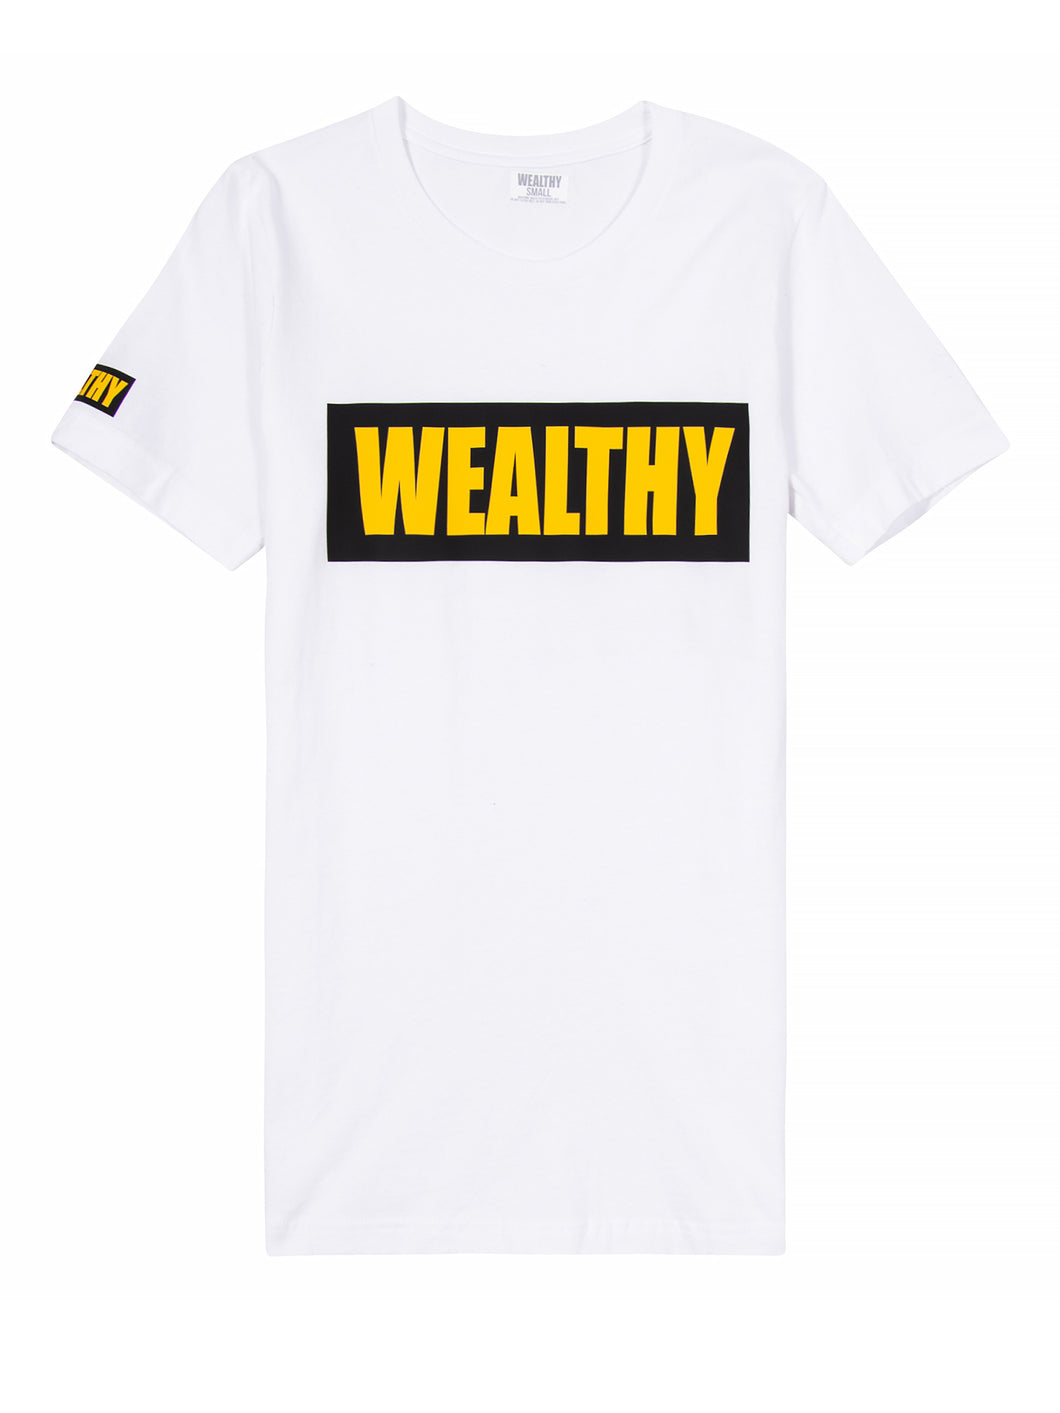 Wealthy Tee (White/Black/Yellow)